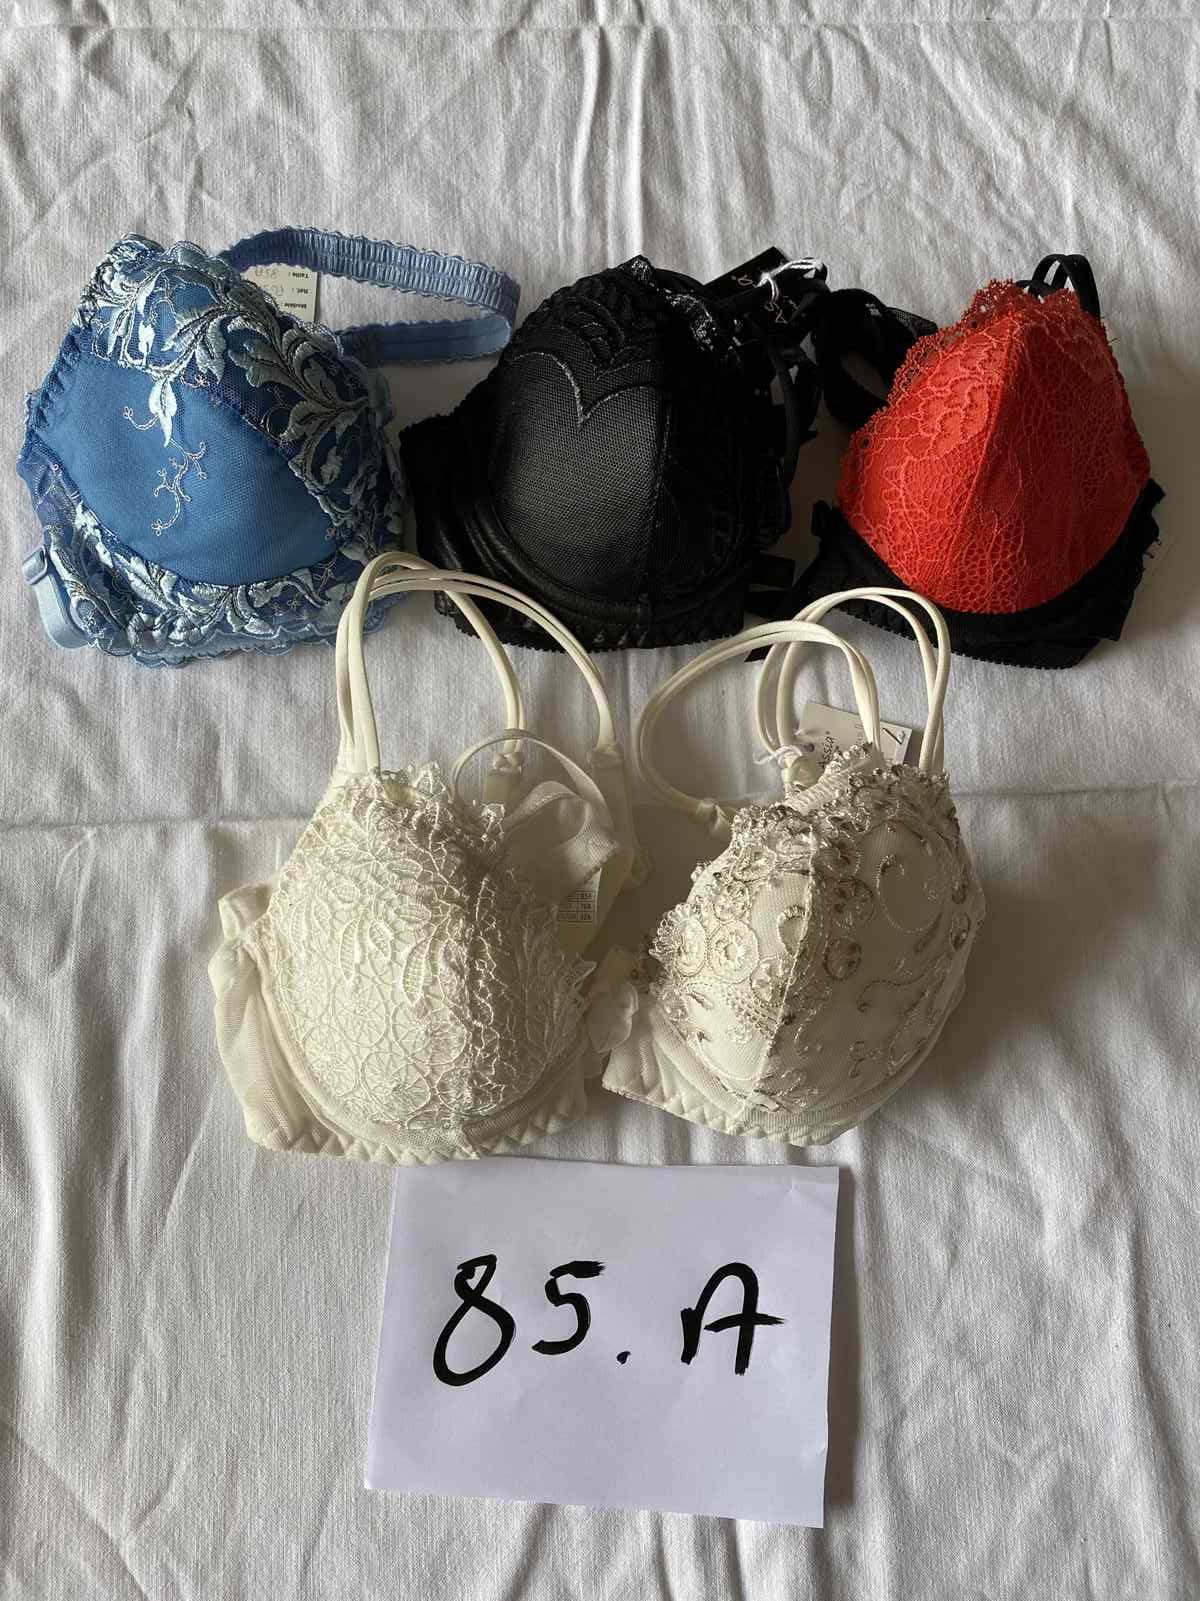 1 Set of underwear brand ASSIA including: 5 bras size 85